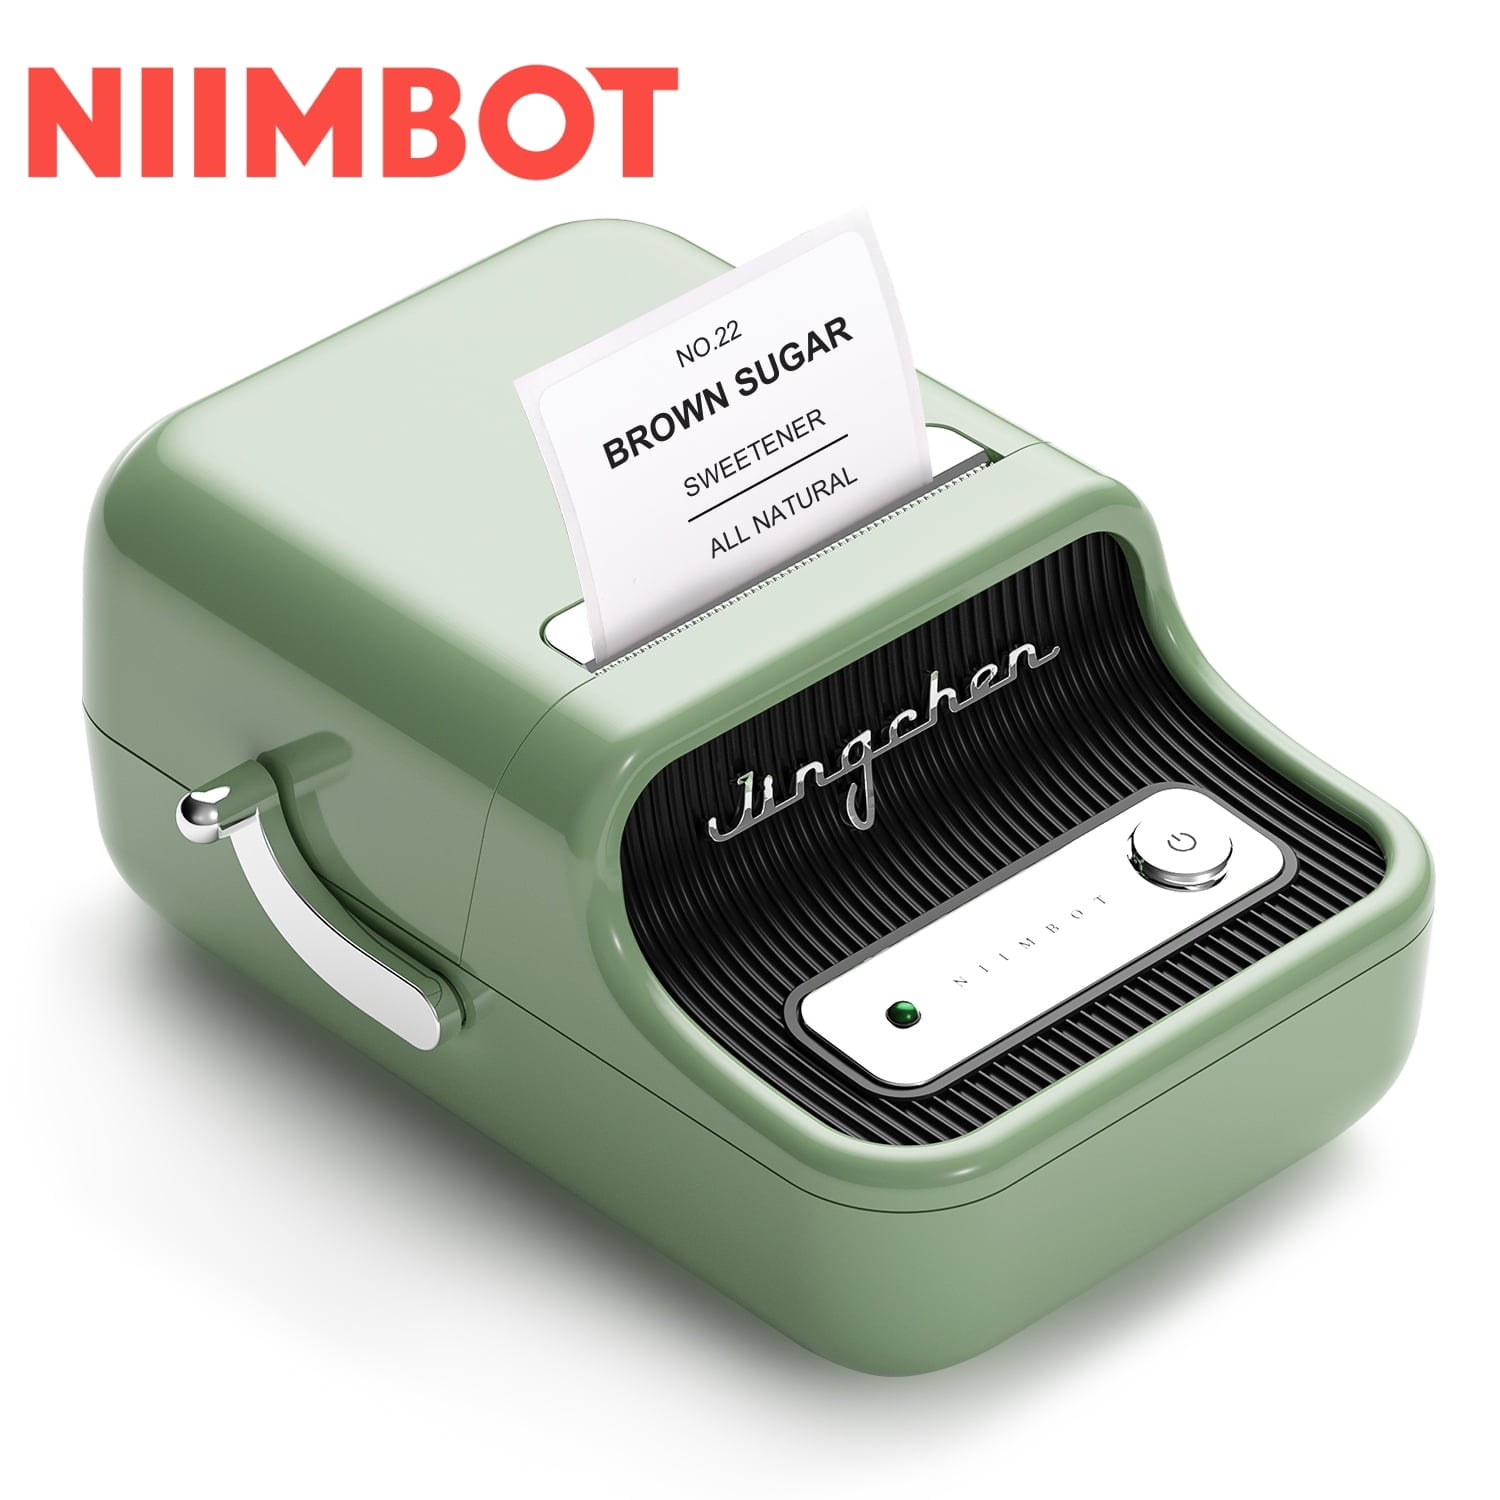 Nimbot Label Maker Portable Thermal Label Printer Name Price